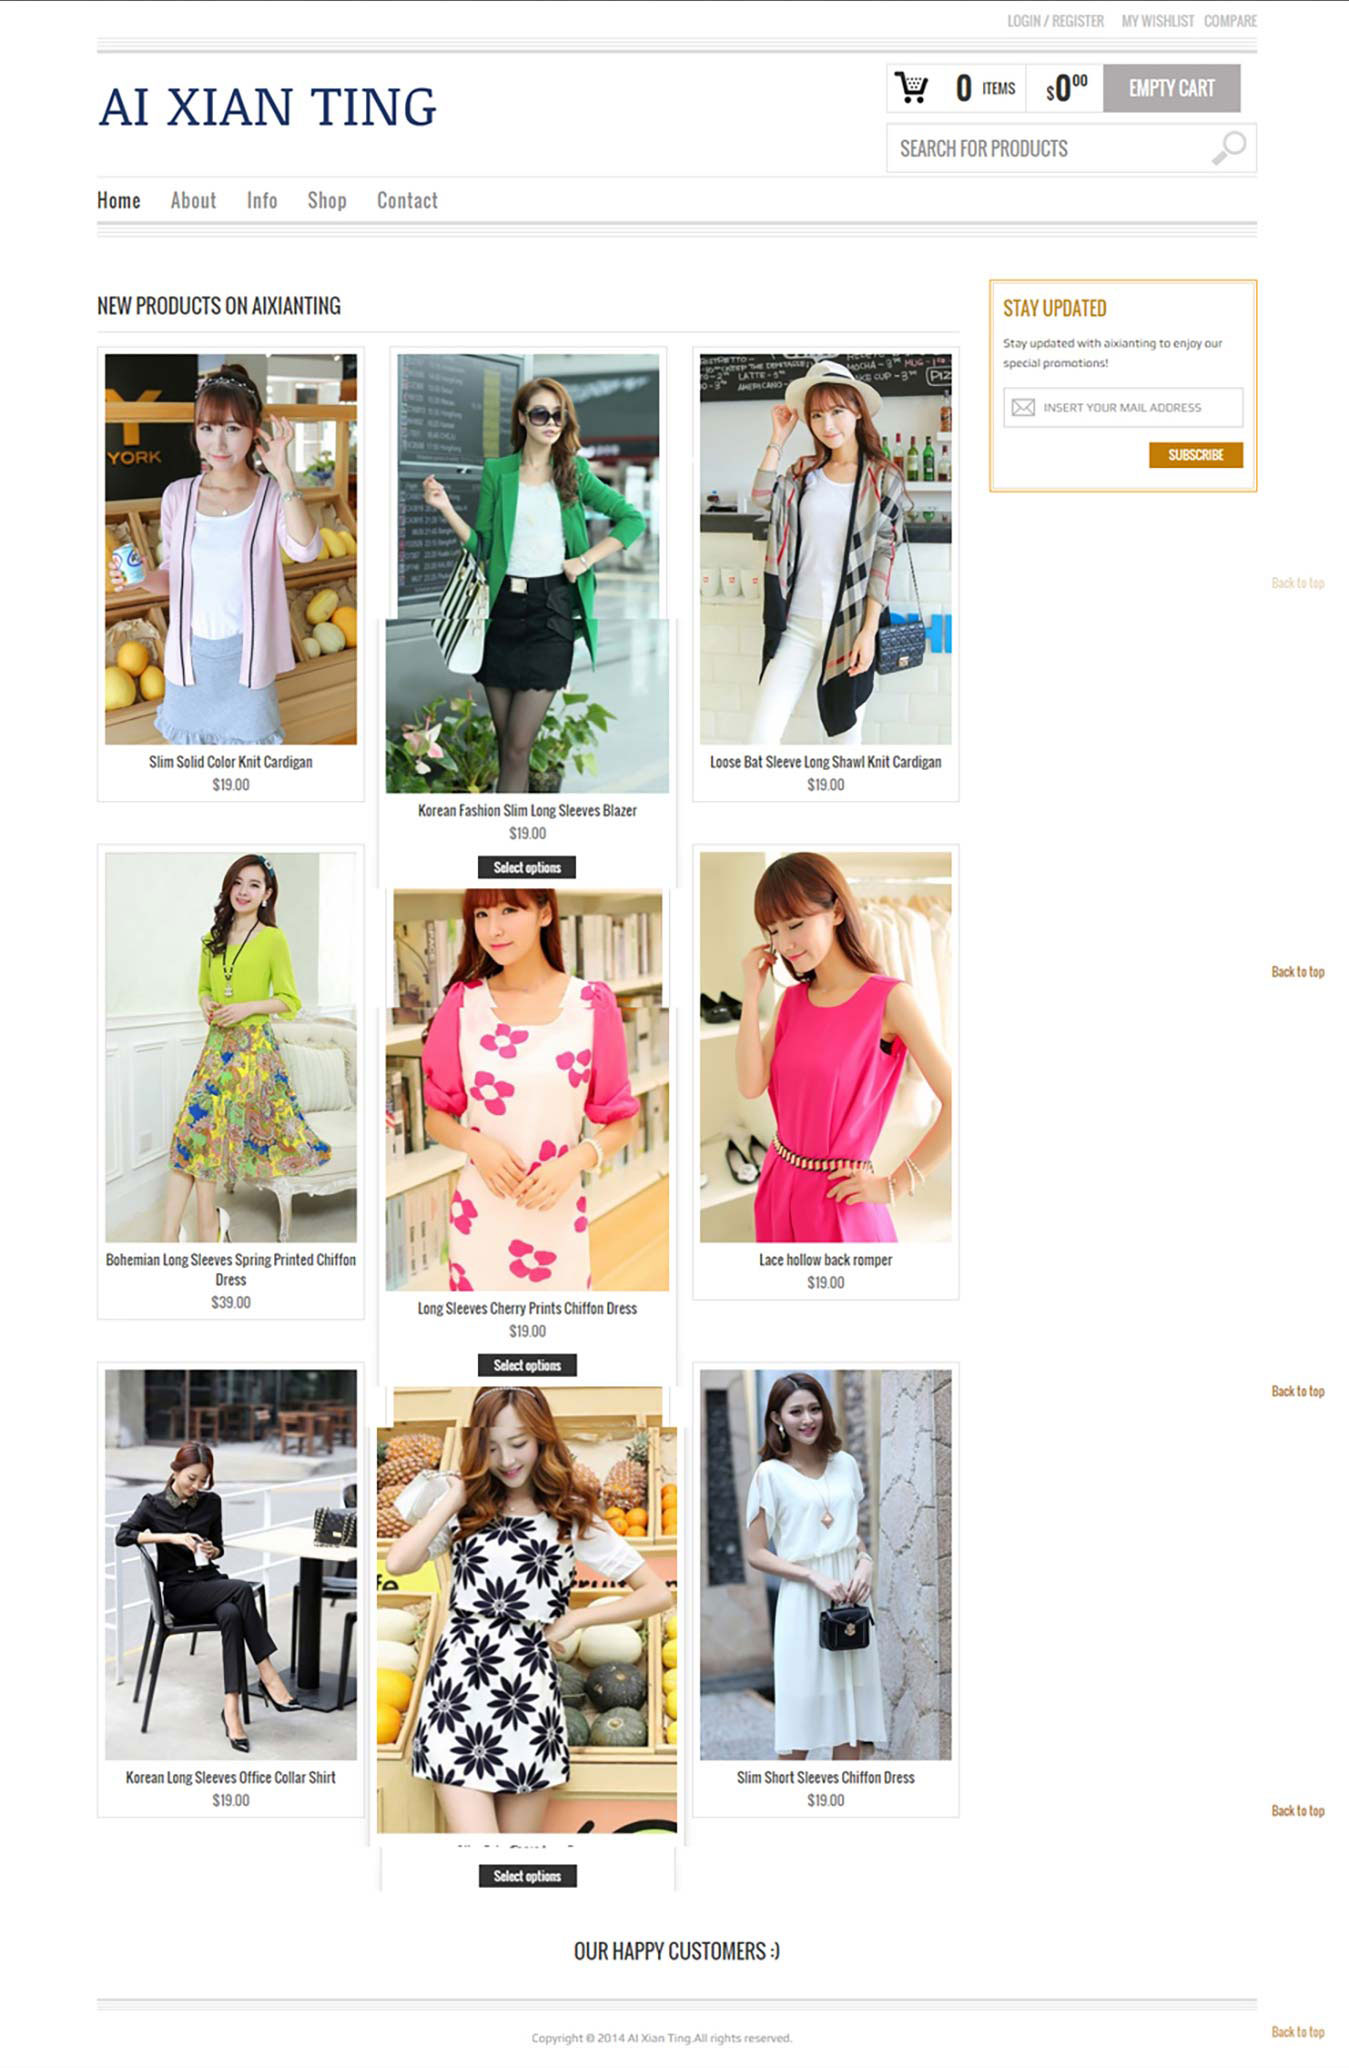 WordPress eCommerce Website Design and Development for Fashion Store